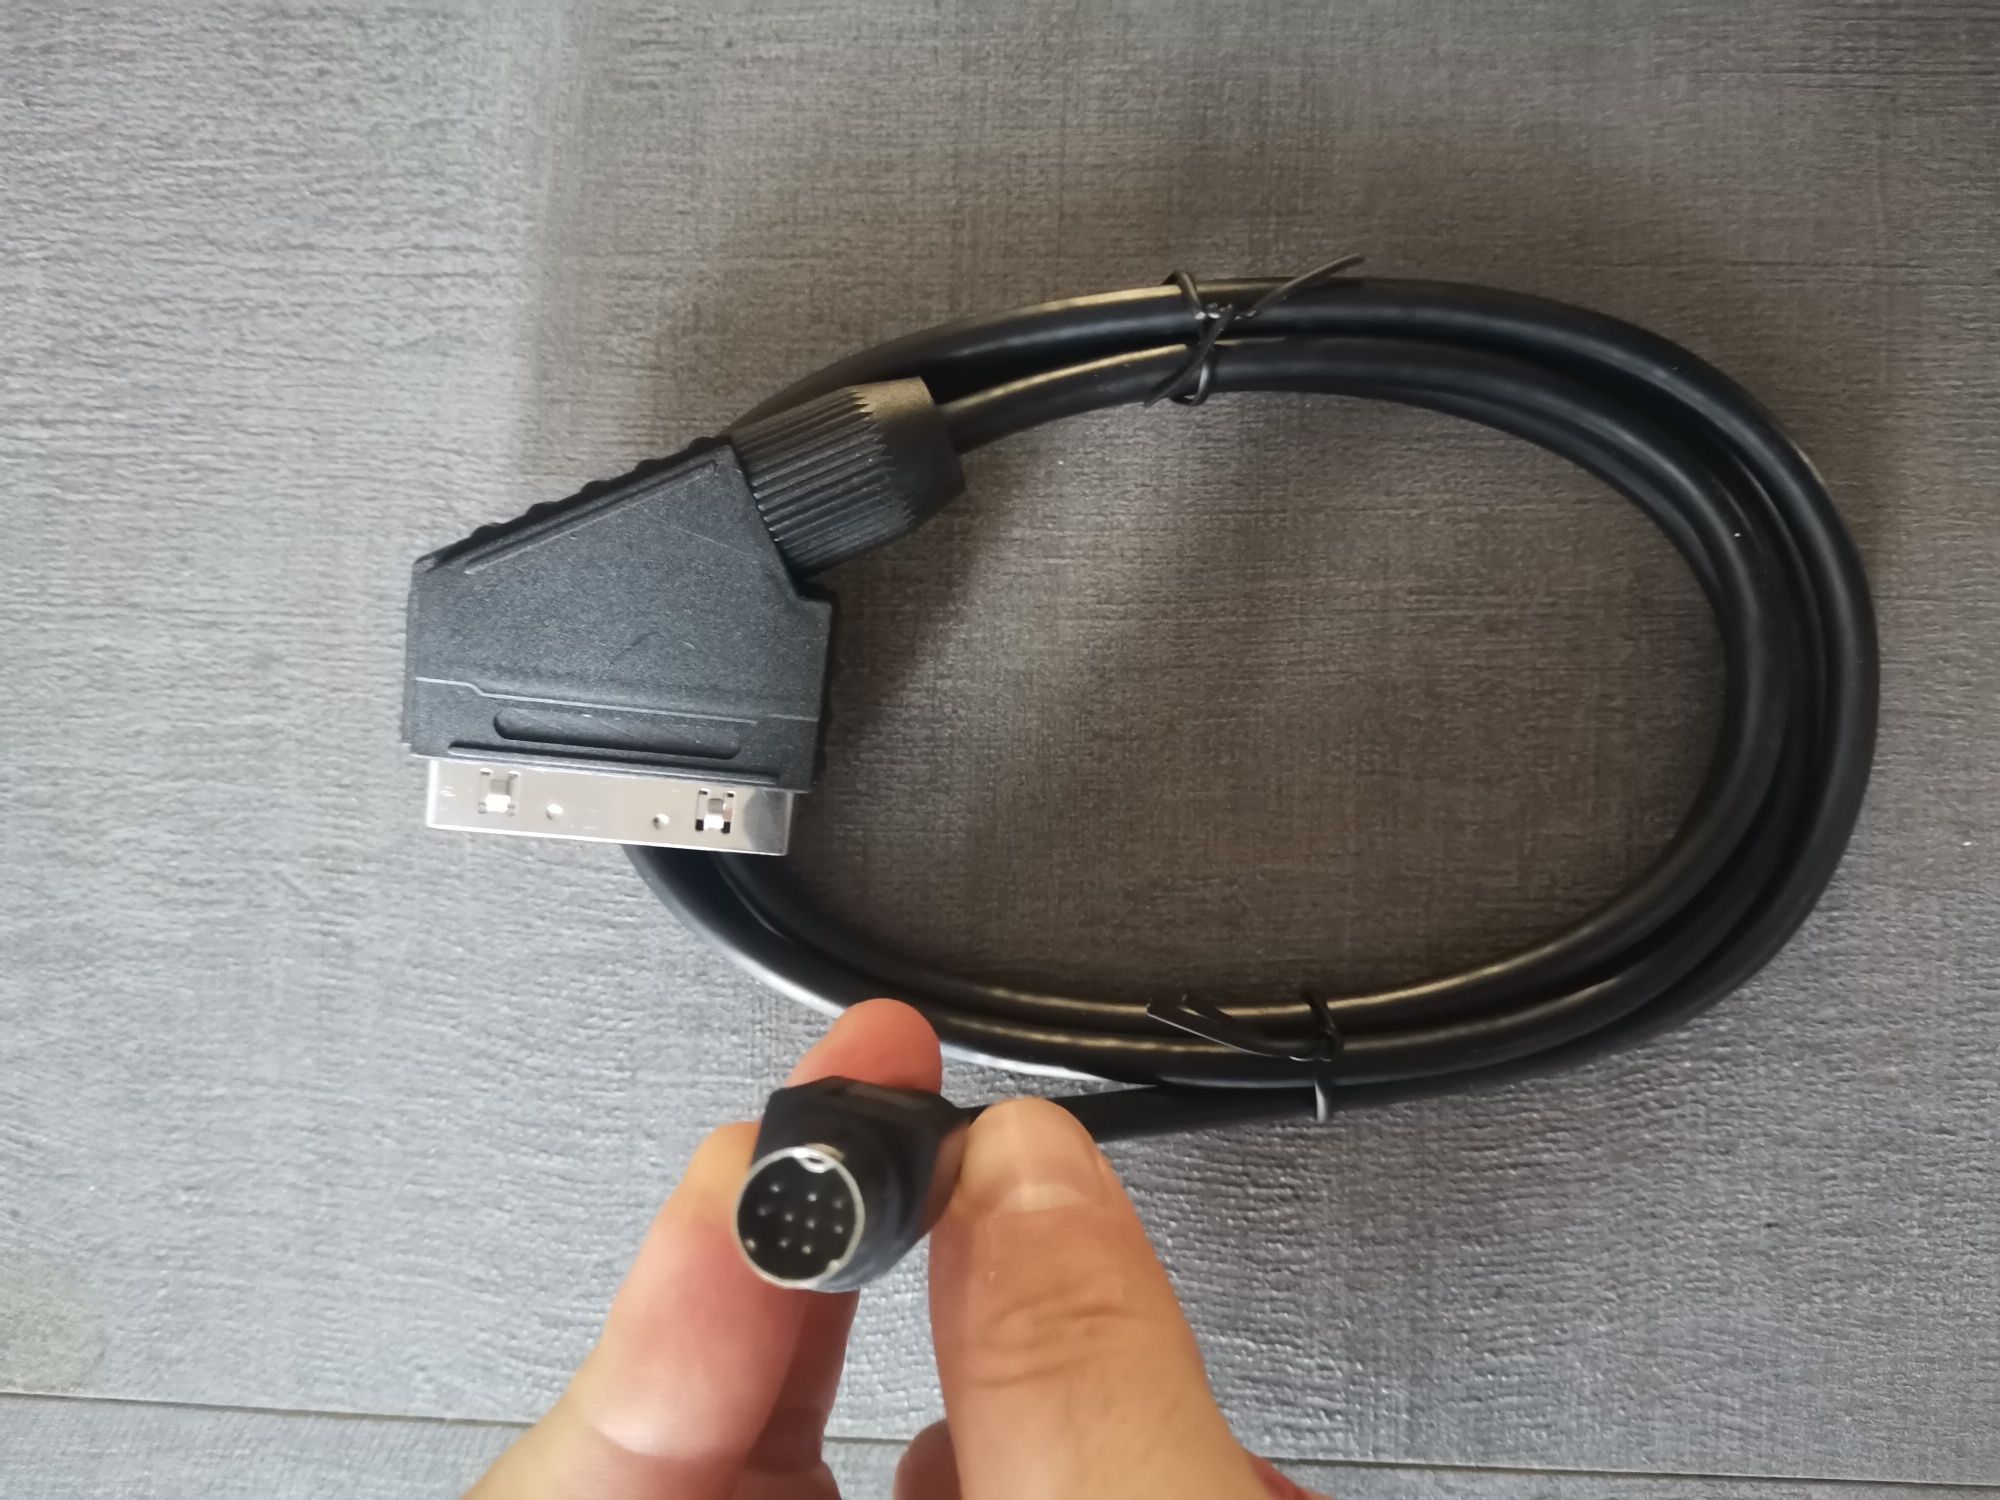 Cablu Euro scart la RCA audio video / SVHS, adaptor euro la RCA